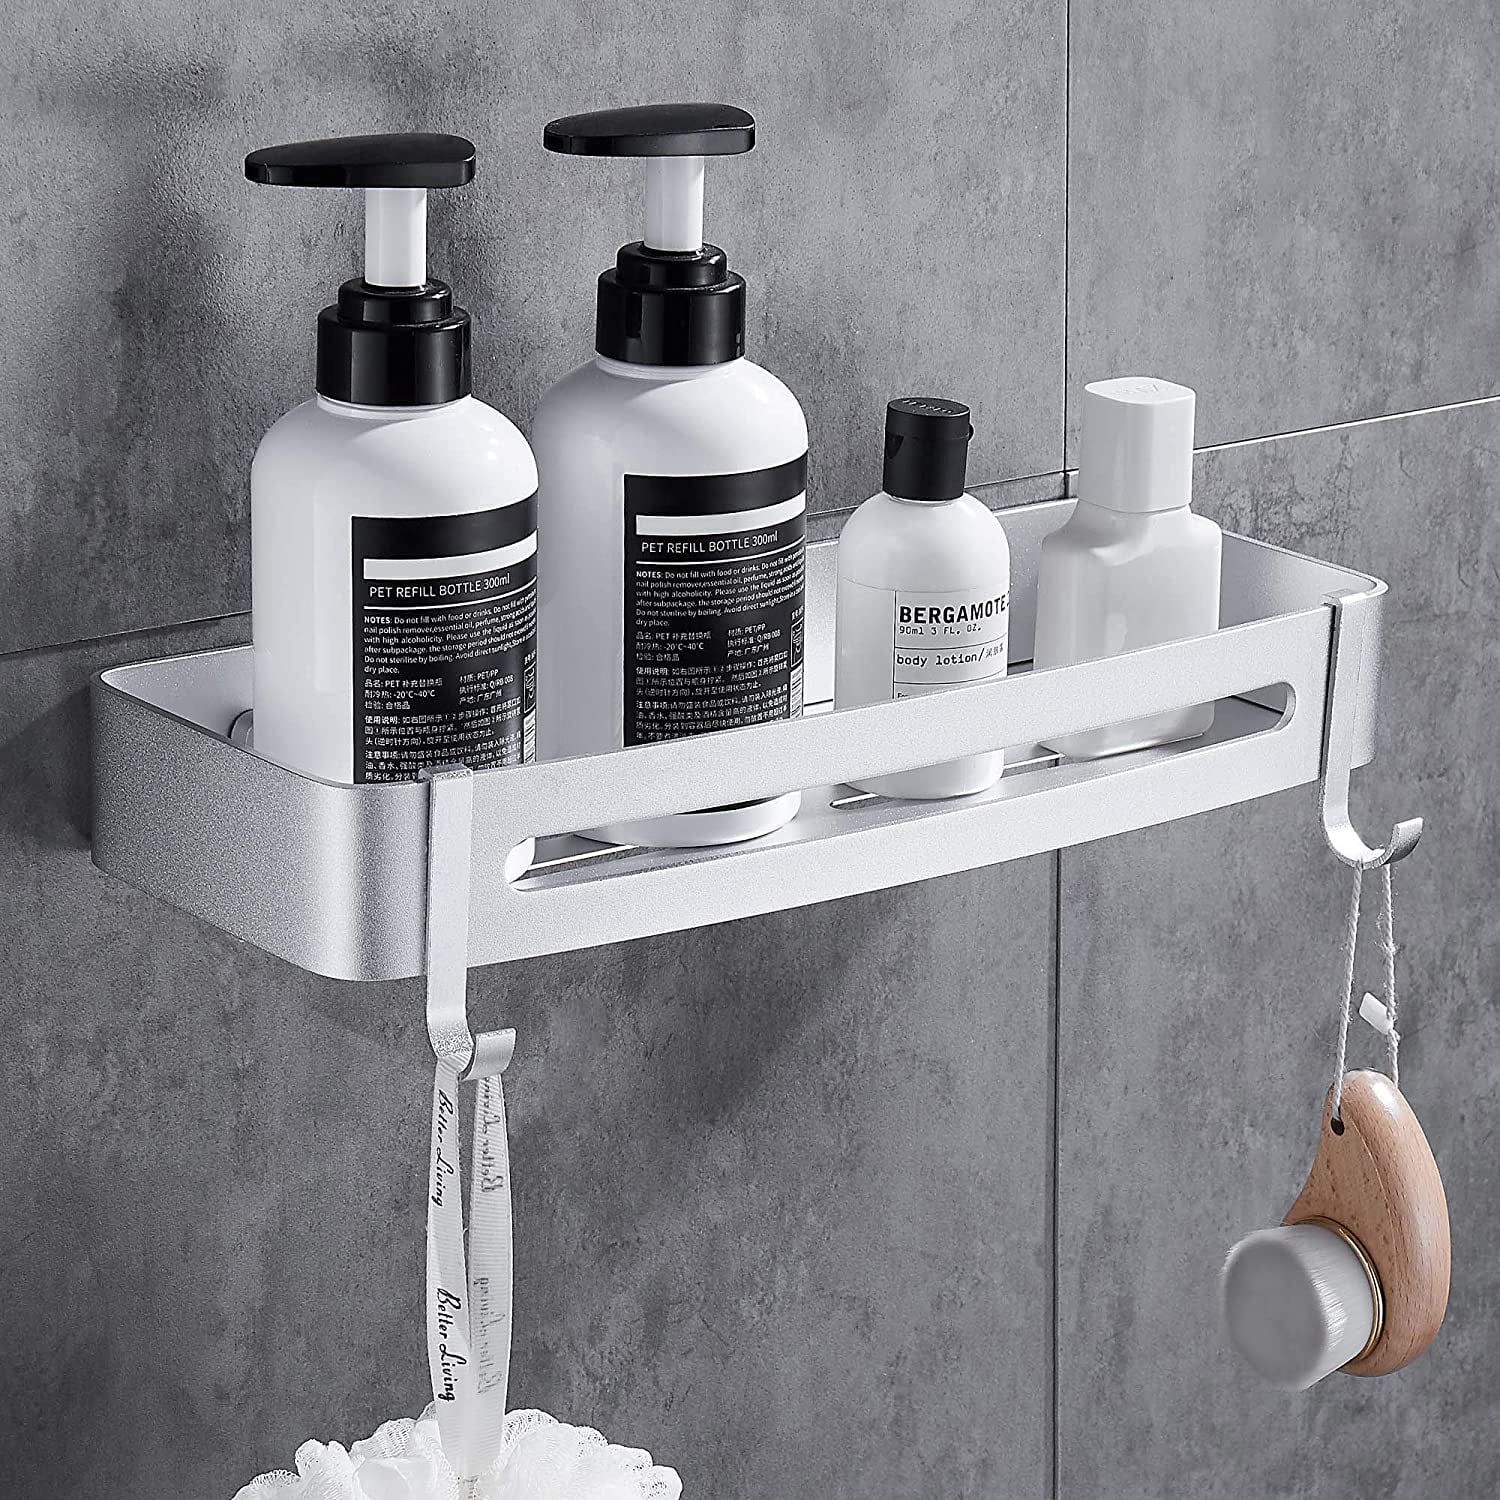 Details about   Bathroom Shampoo Holder Storage Organizer Towel Hanger Soap Bath Rack Wall Mount 